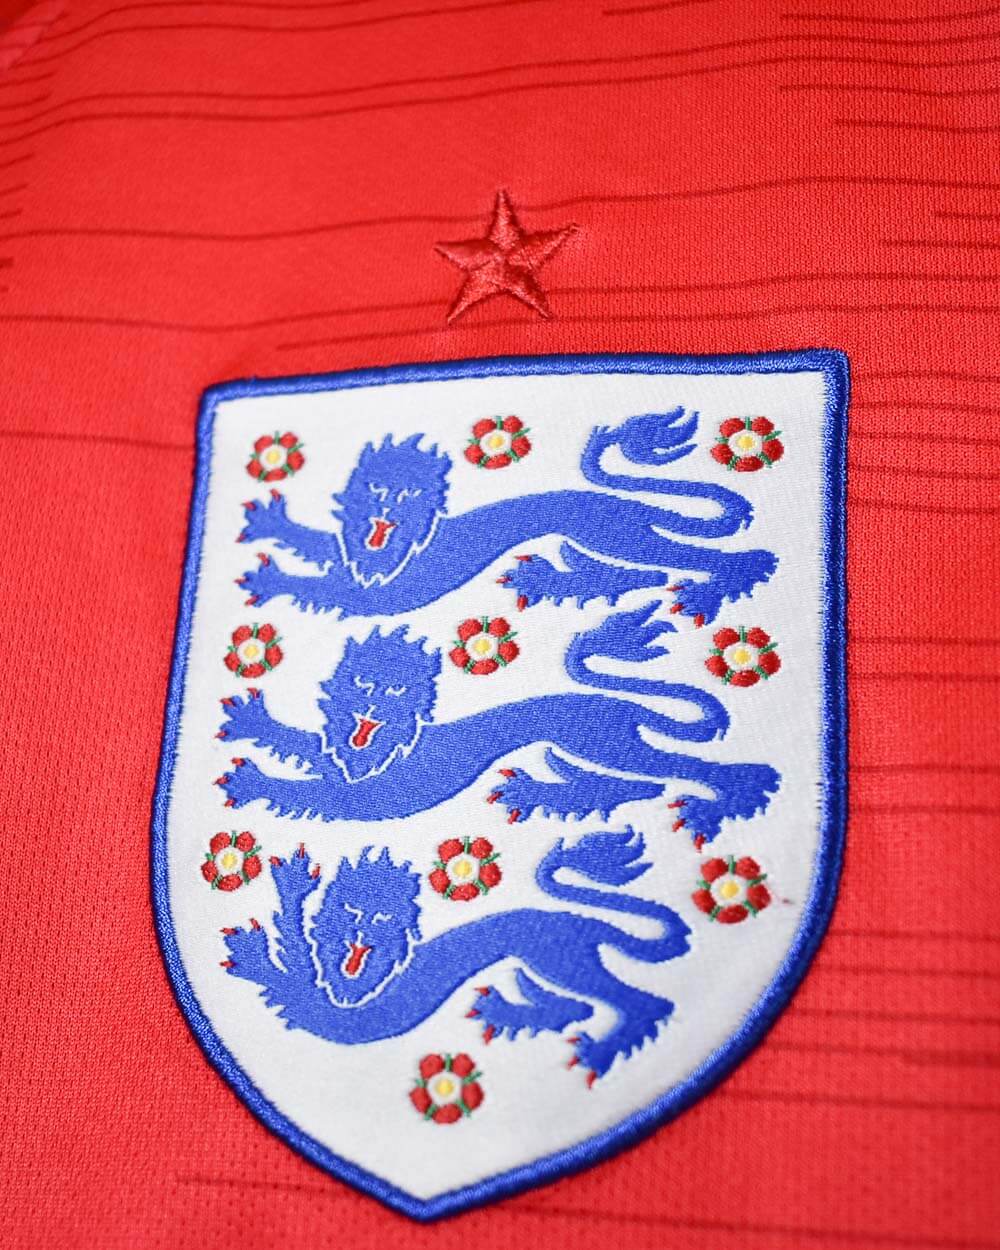 Red Nike 2018 England Away Shirt - Medium